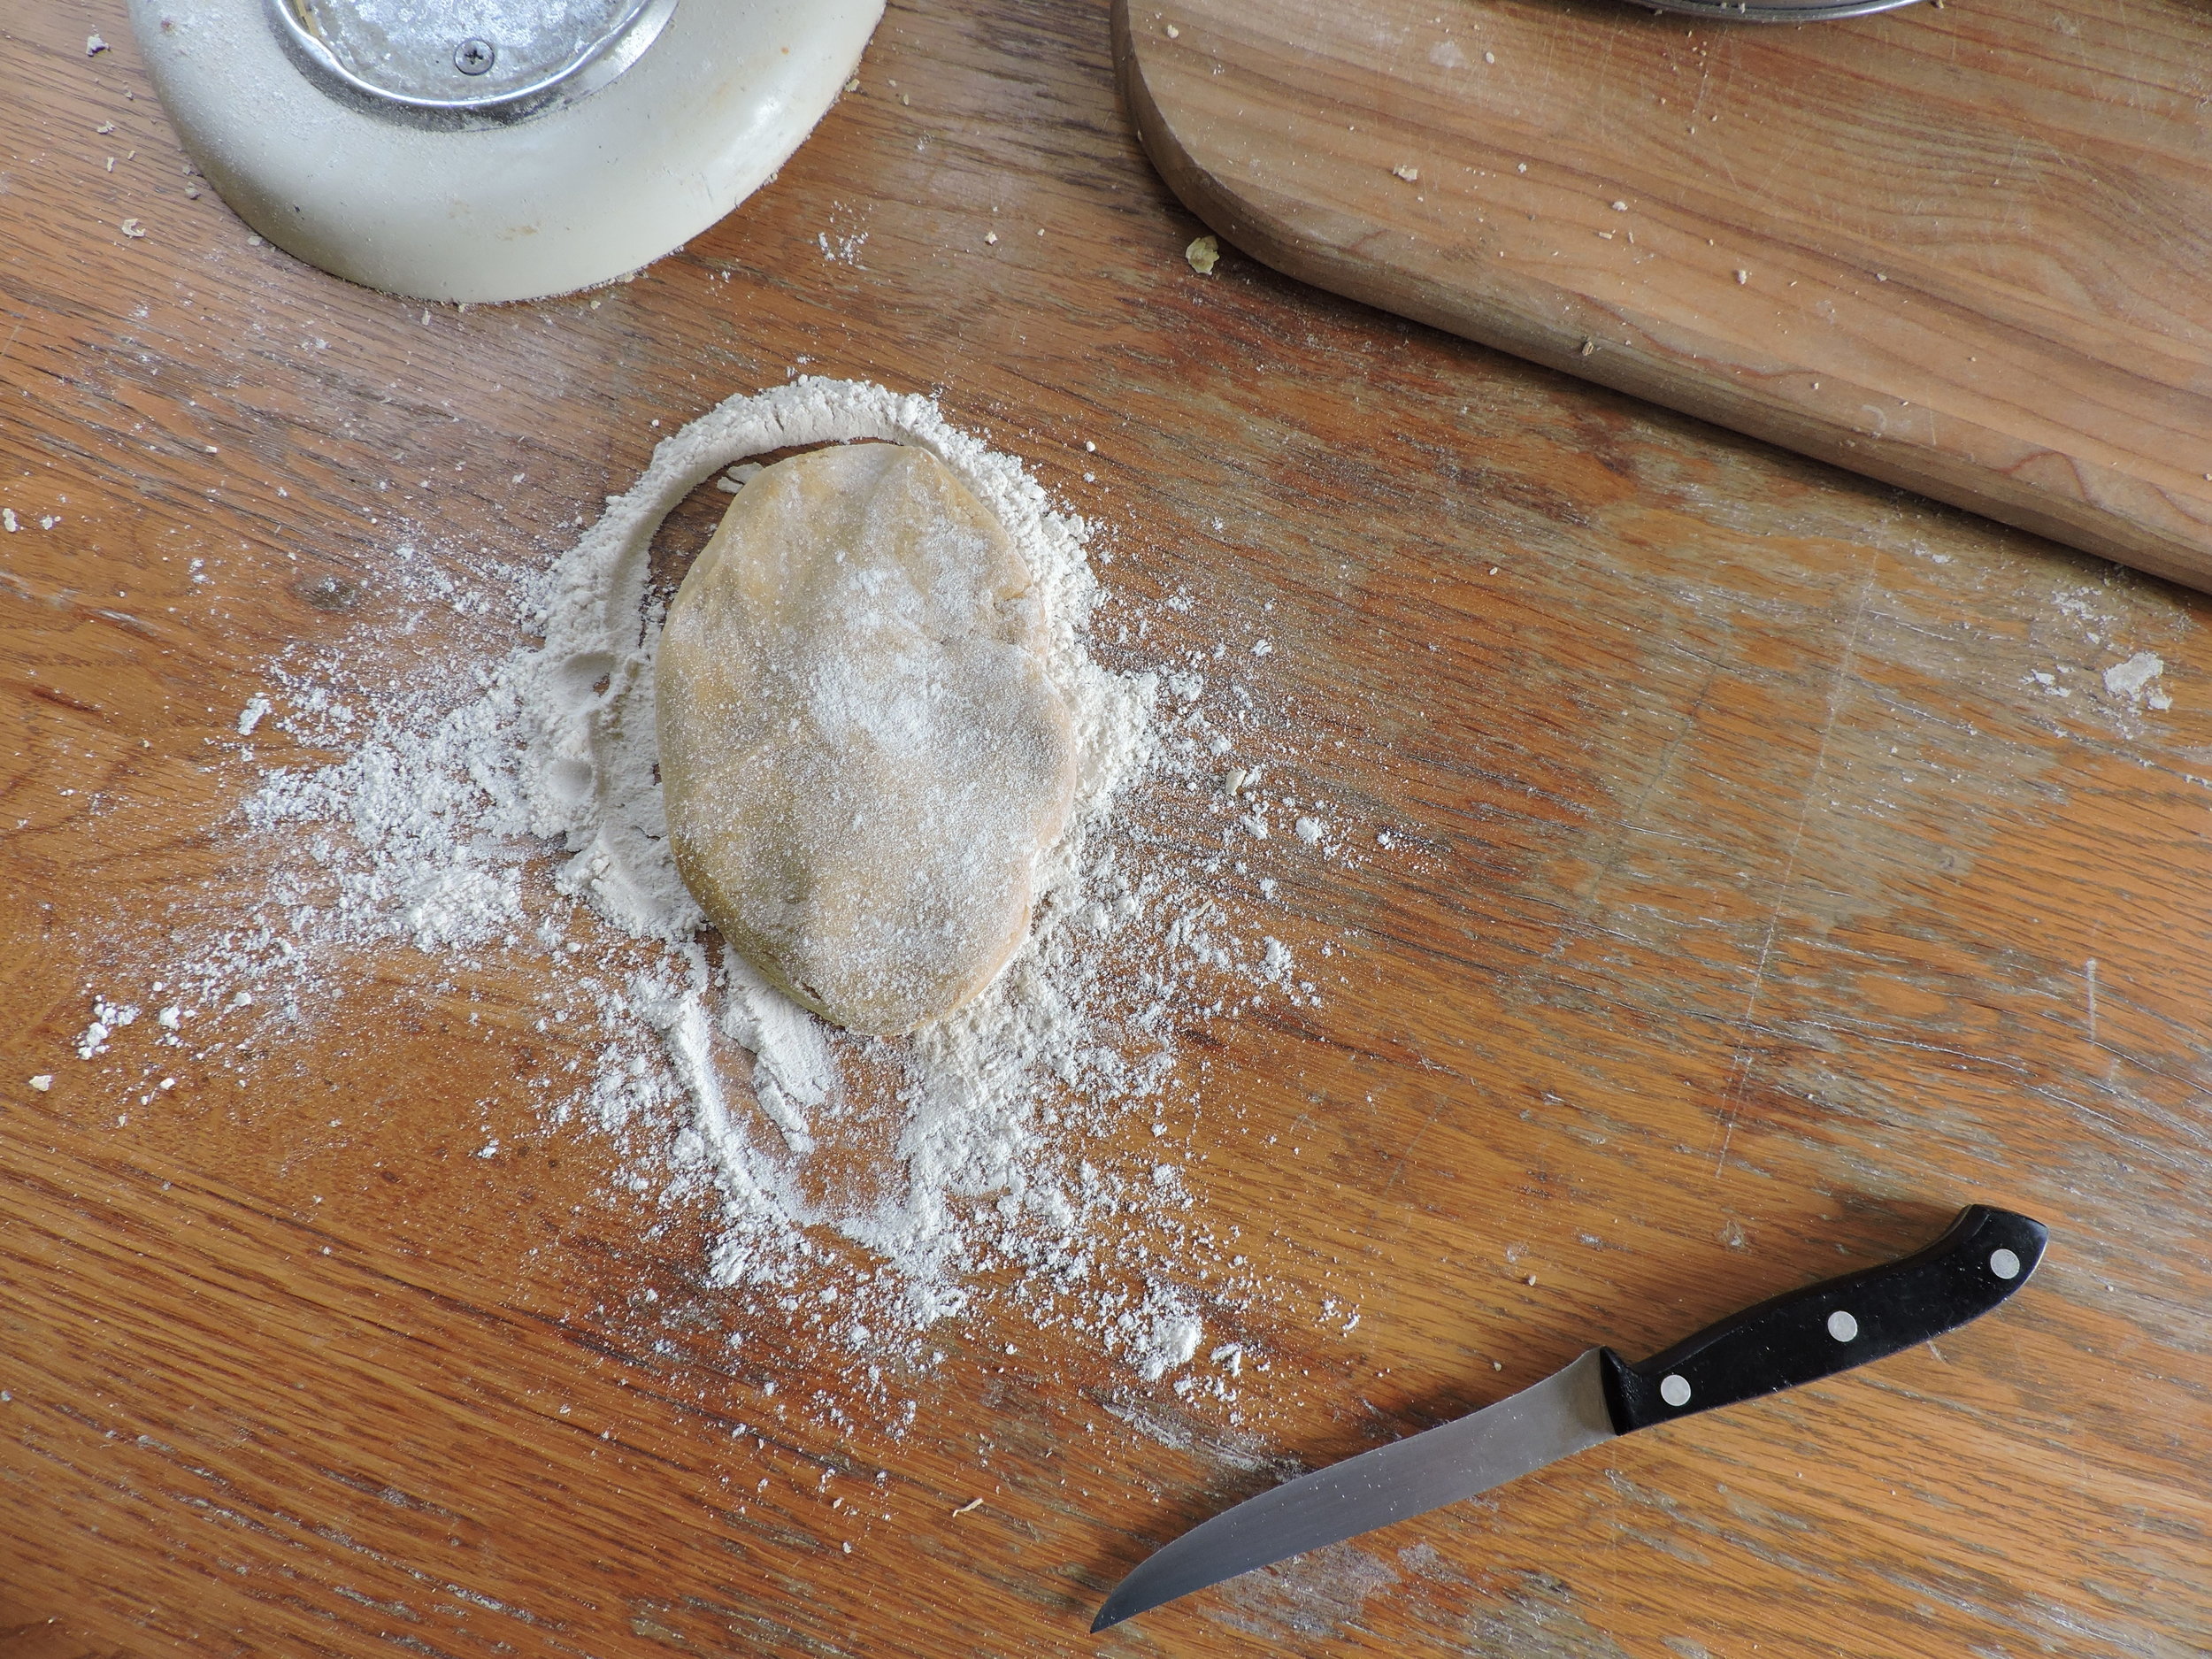  Flatten dough piece into rough oblong shape. 